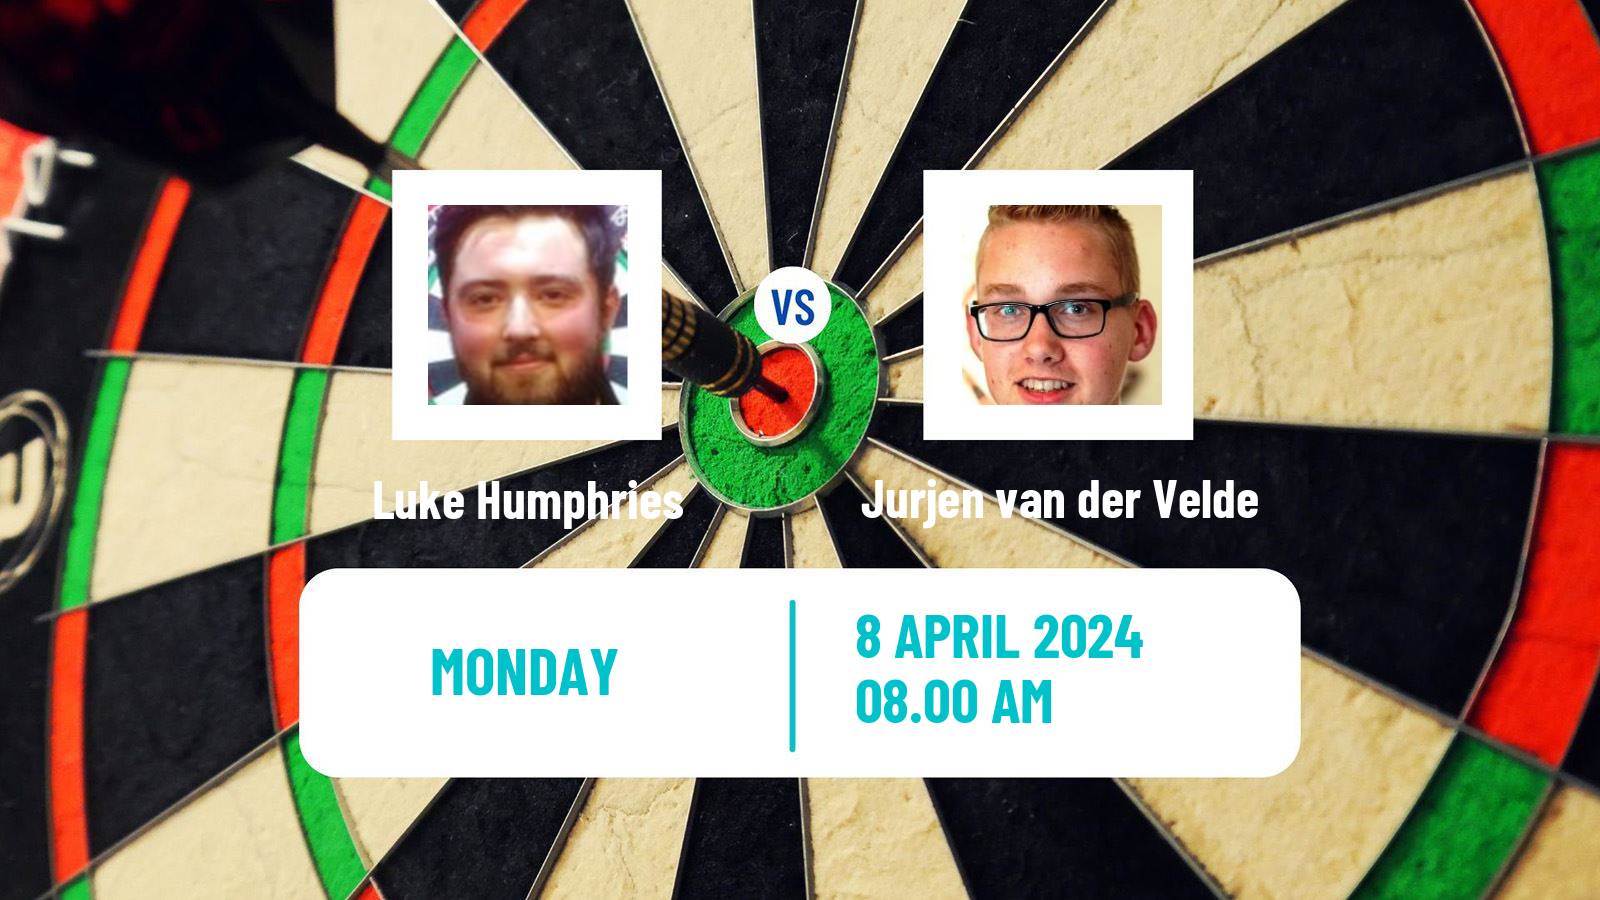 Darts Players Championship 7 Luke Humphries - Jurjen van der Velde